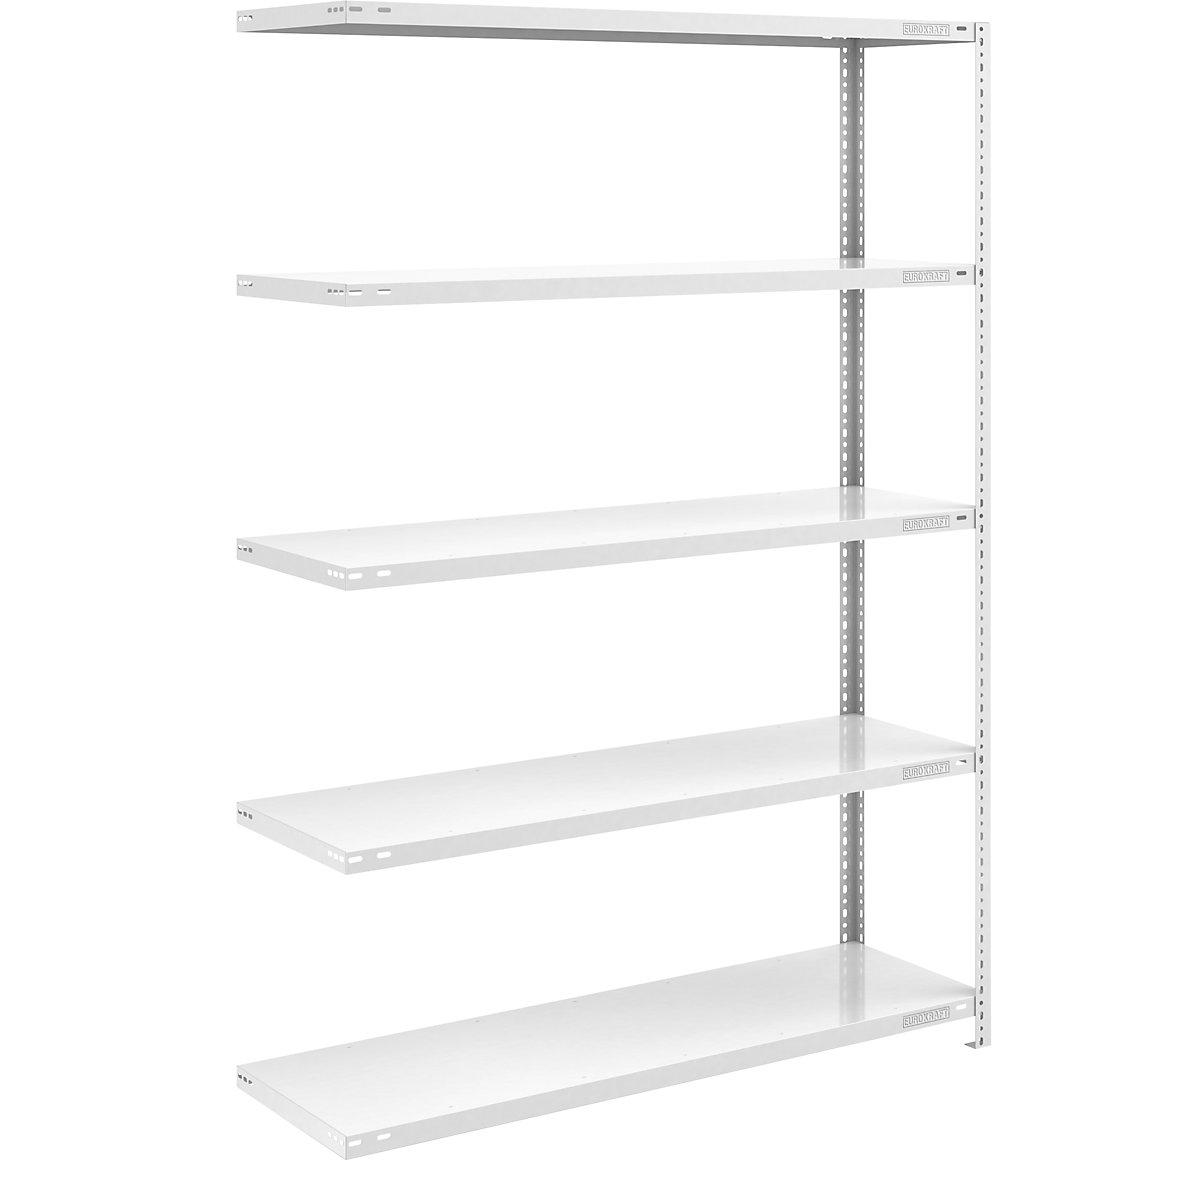 Bolt-together shelf unit, light duty, plastic coated – eurokraft pro, shelf unit height 2000 mm, shelf width 1300 mm, depth 500 mm, extension shelf unit-8